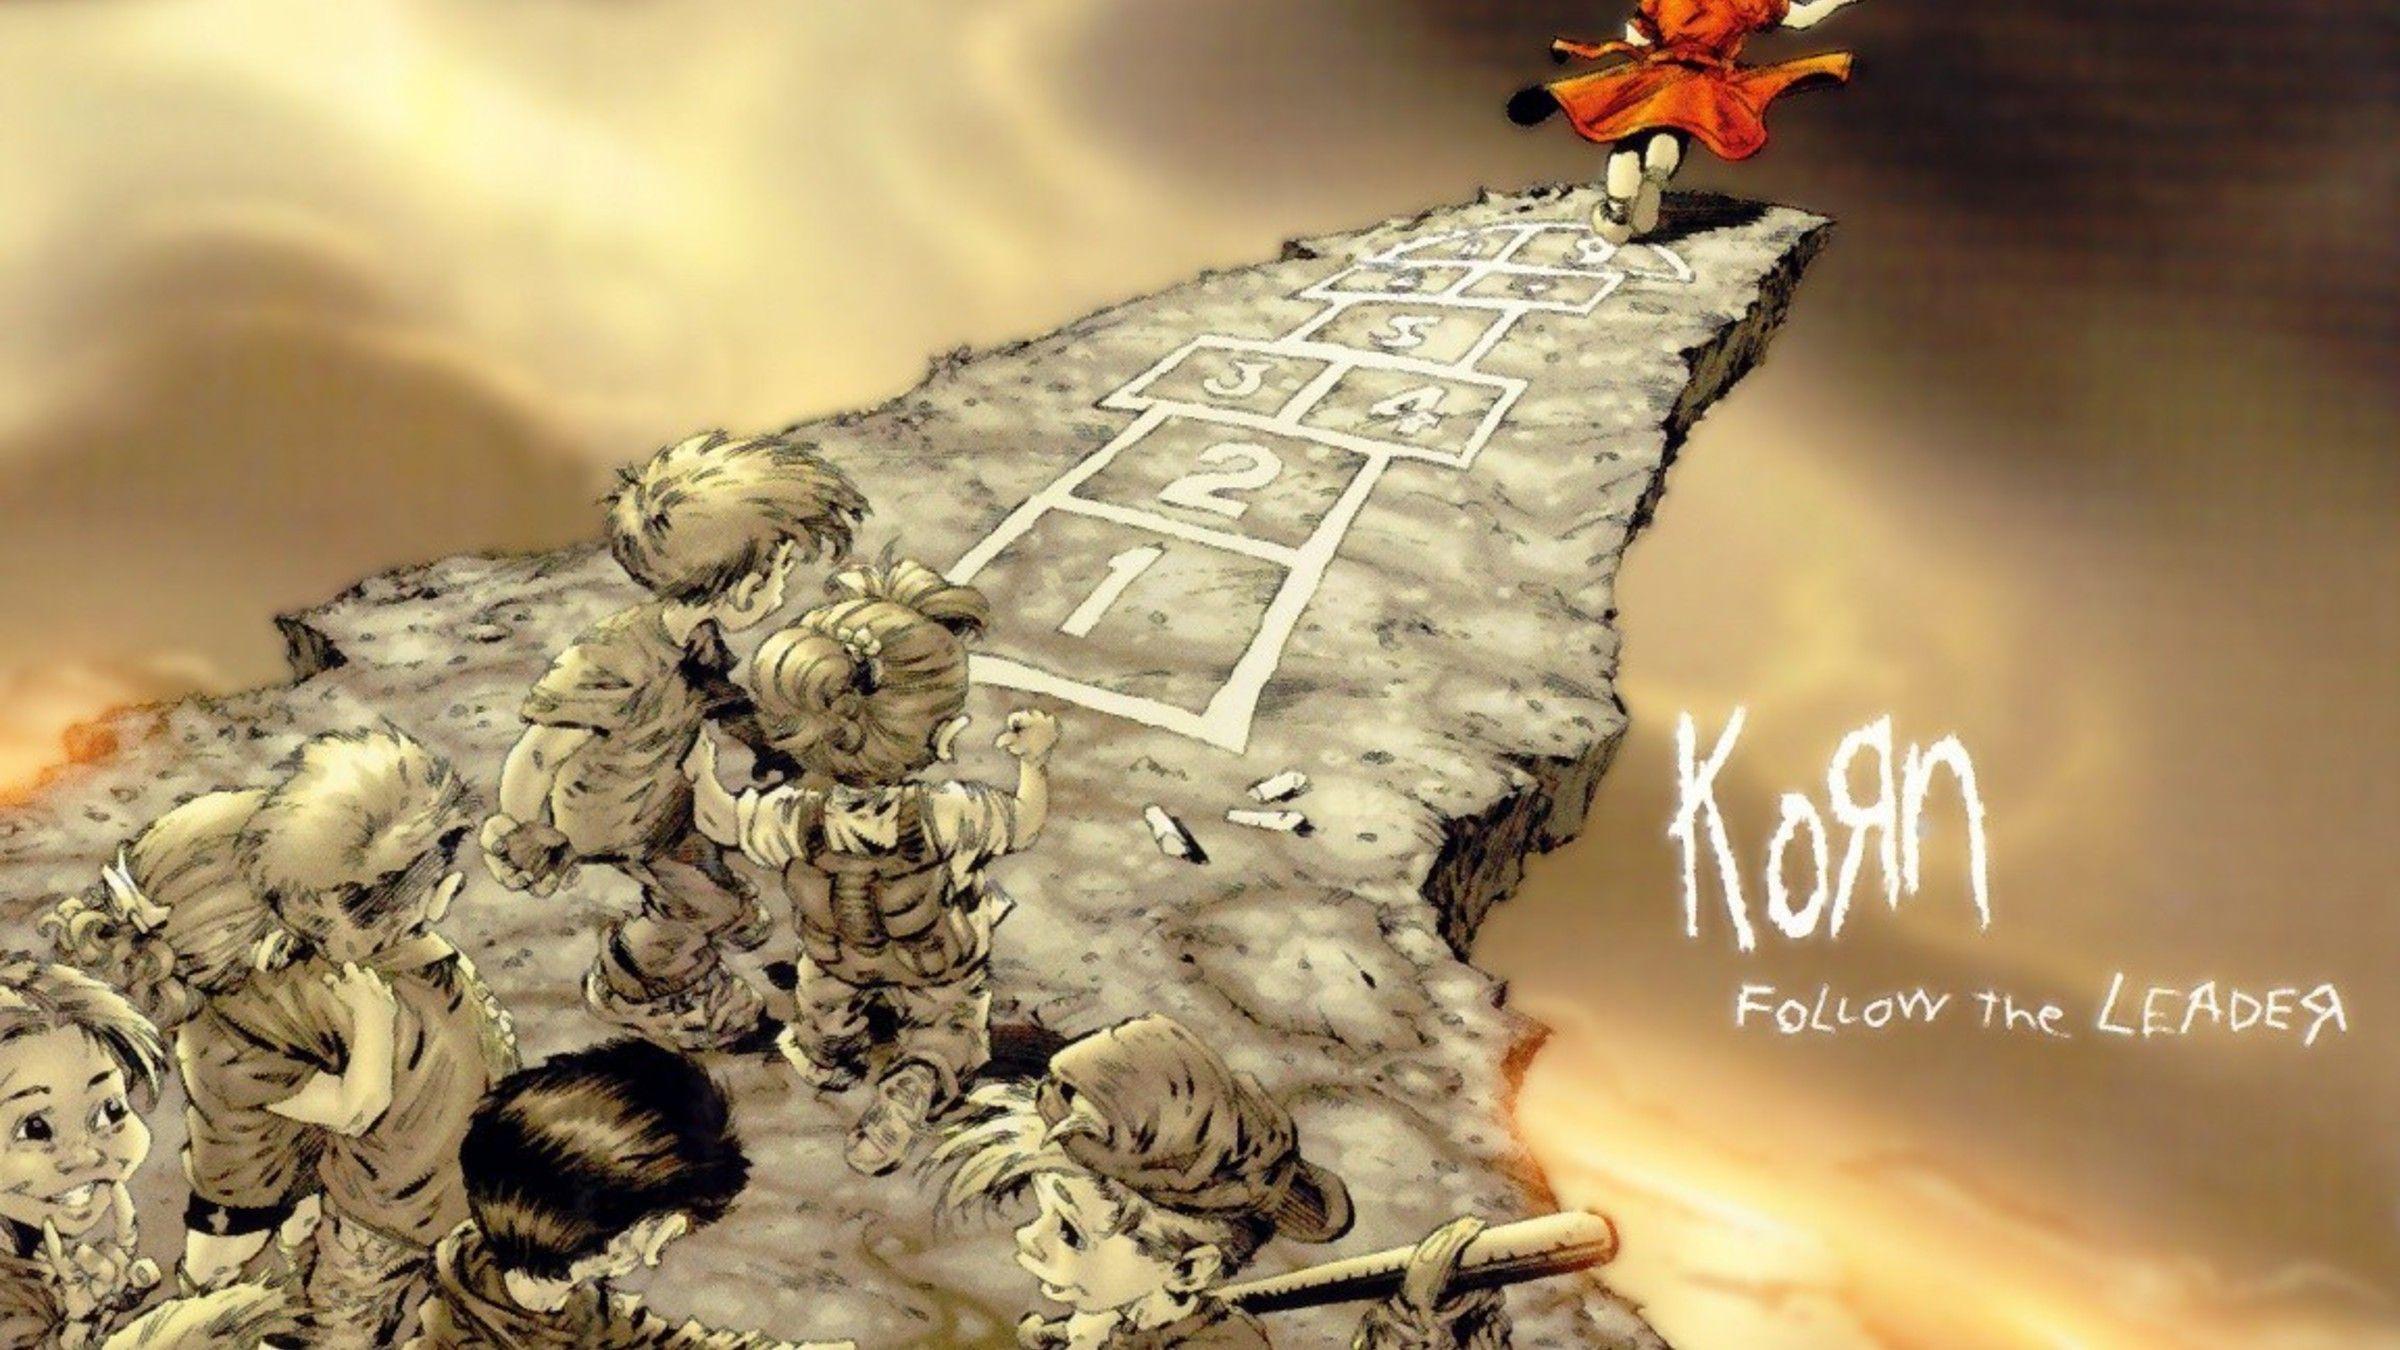 Korn album covers wallpaper. PC